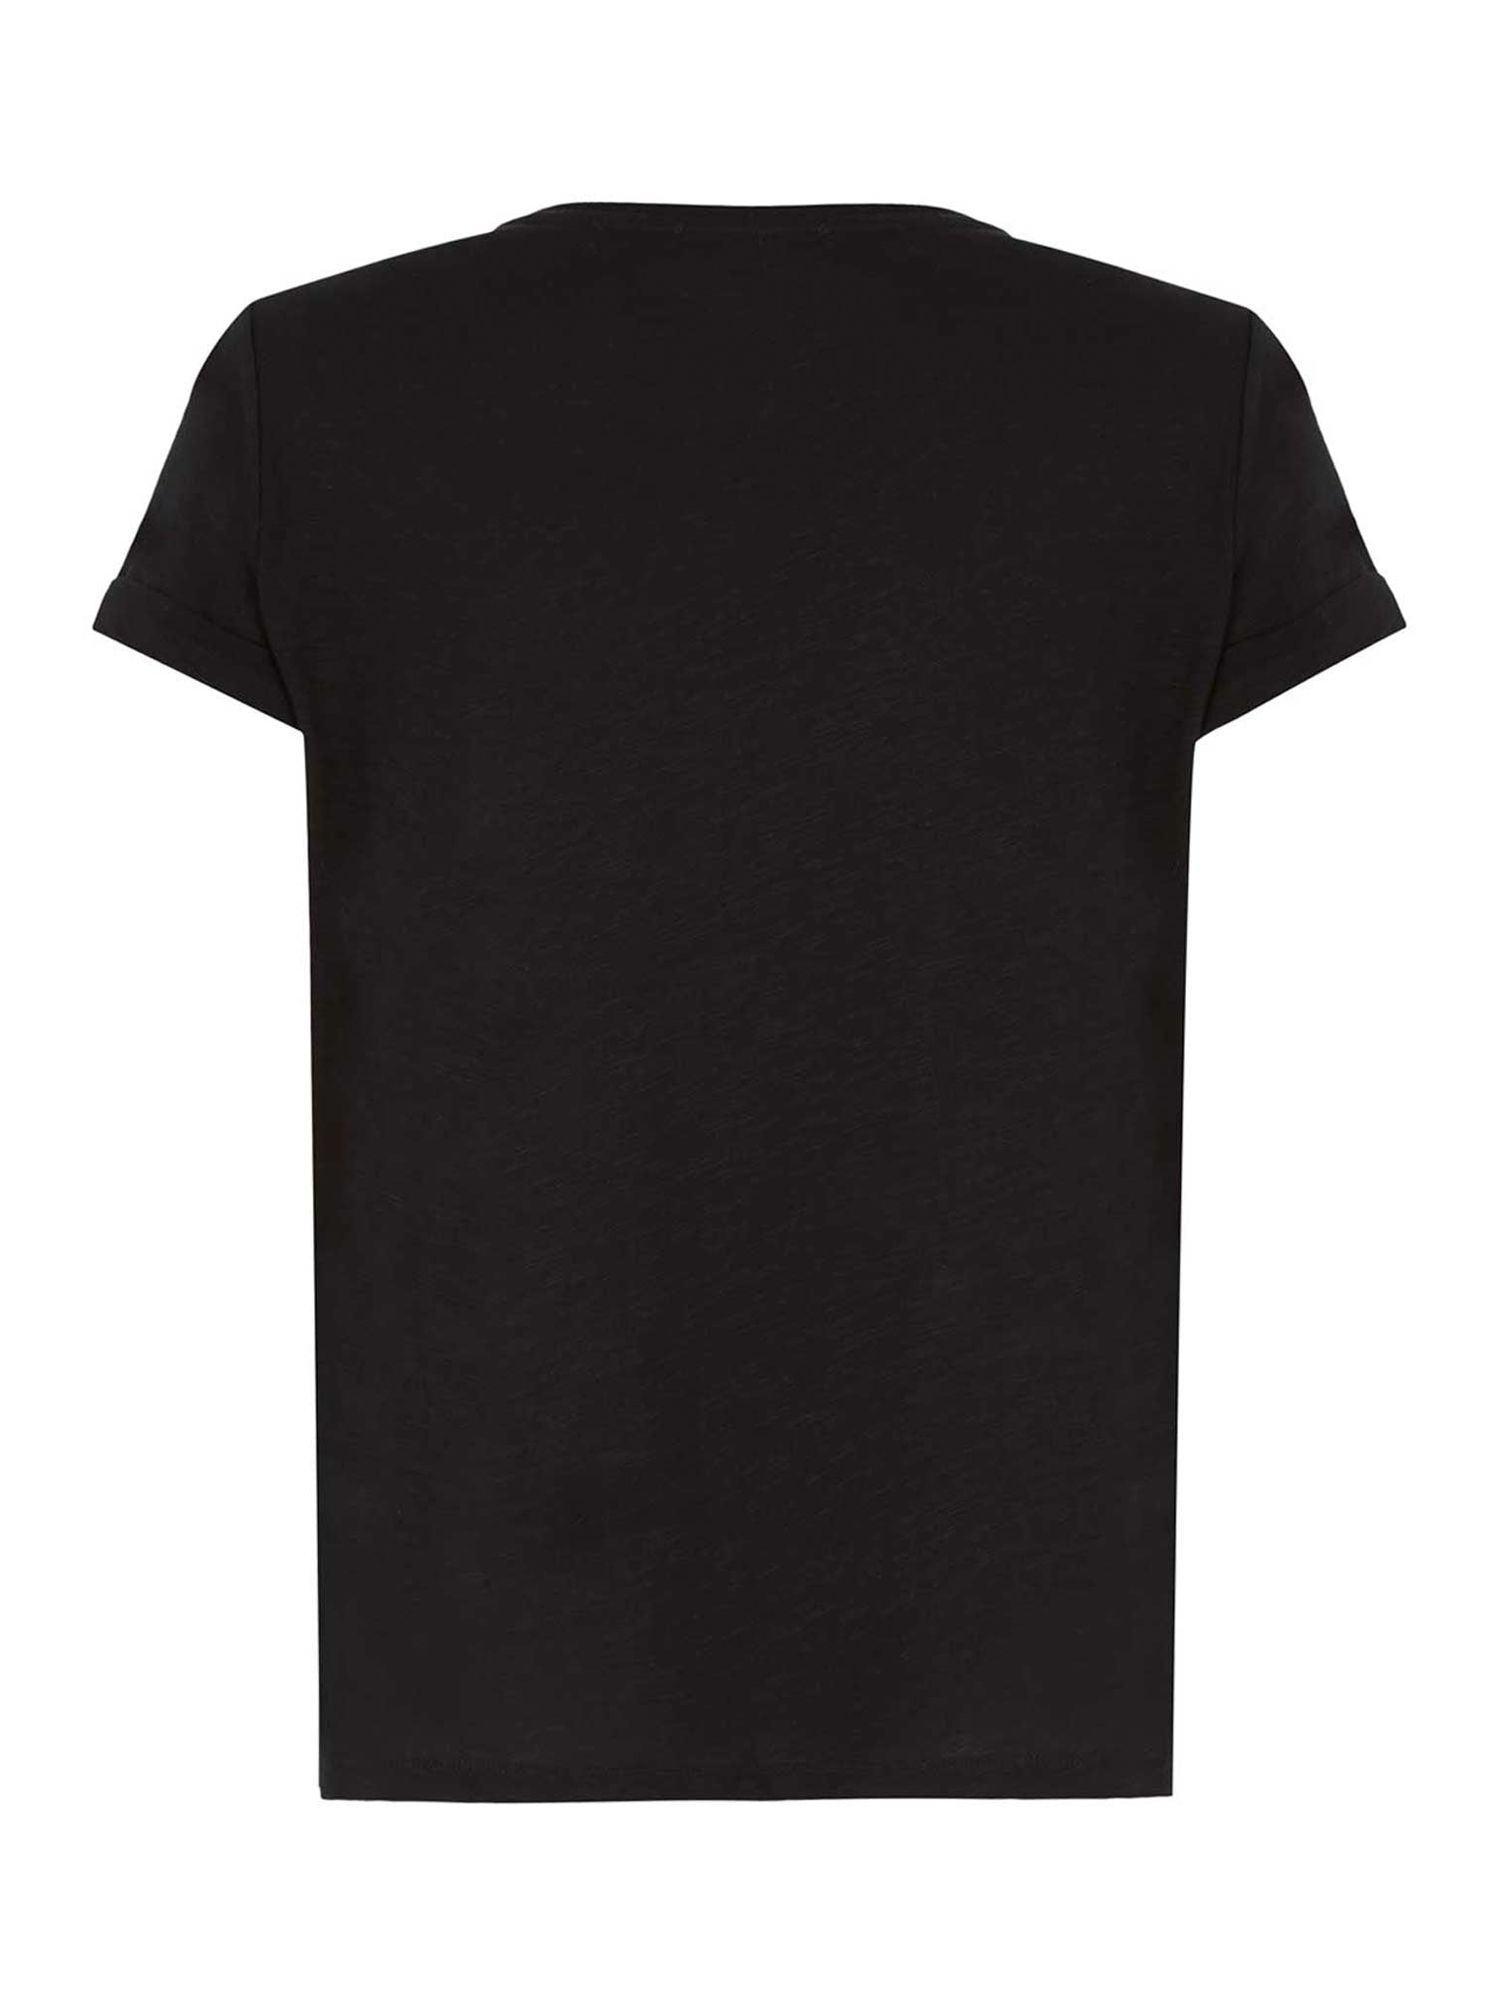 Mint Velvet Cotton Star T-Shirt, Black at John Lewis & Partners